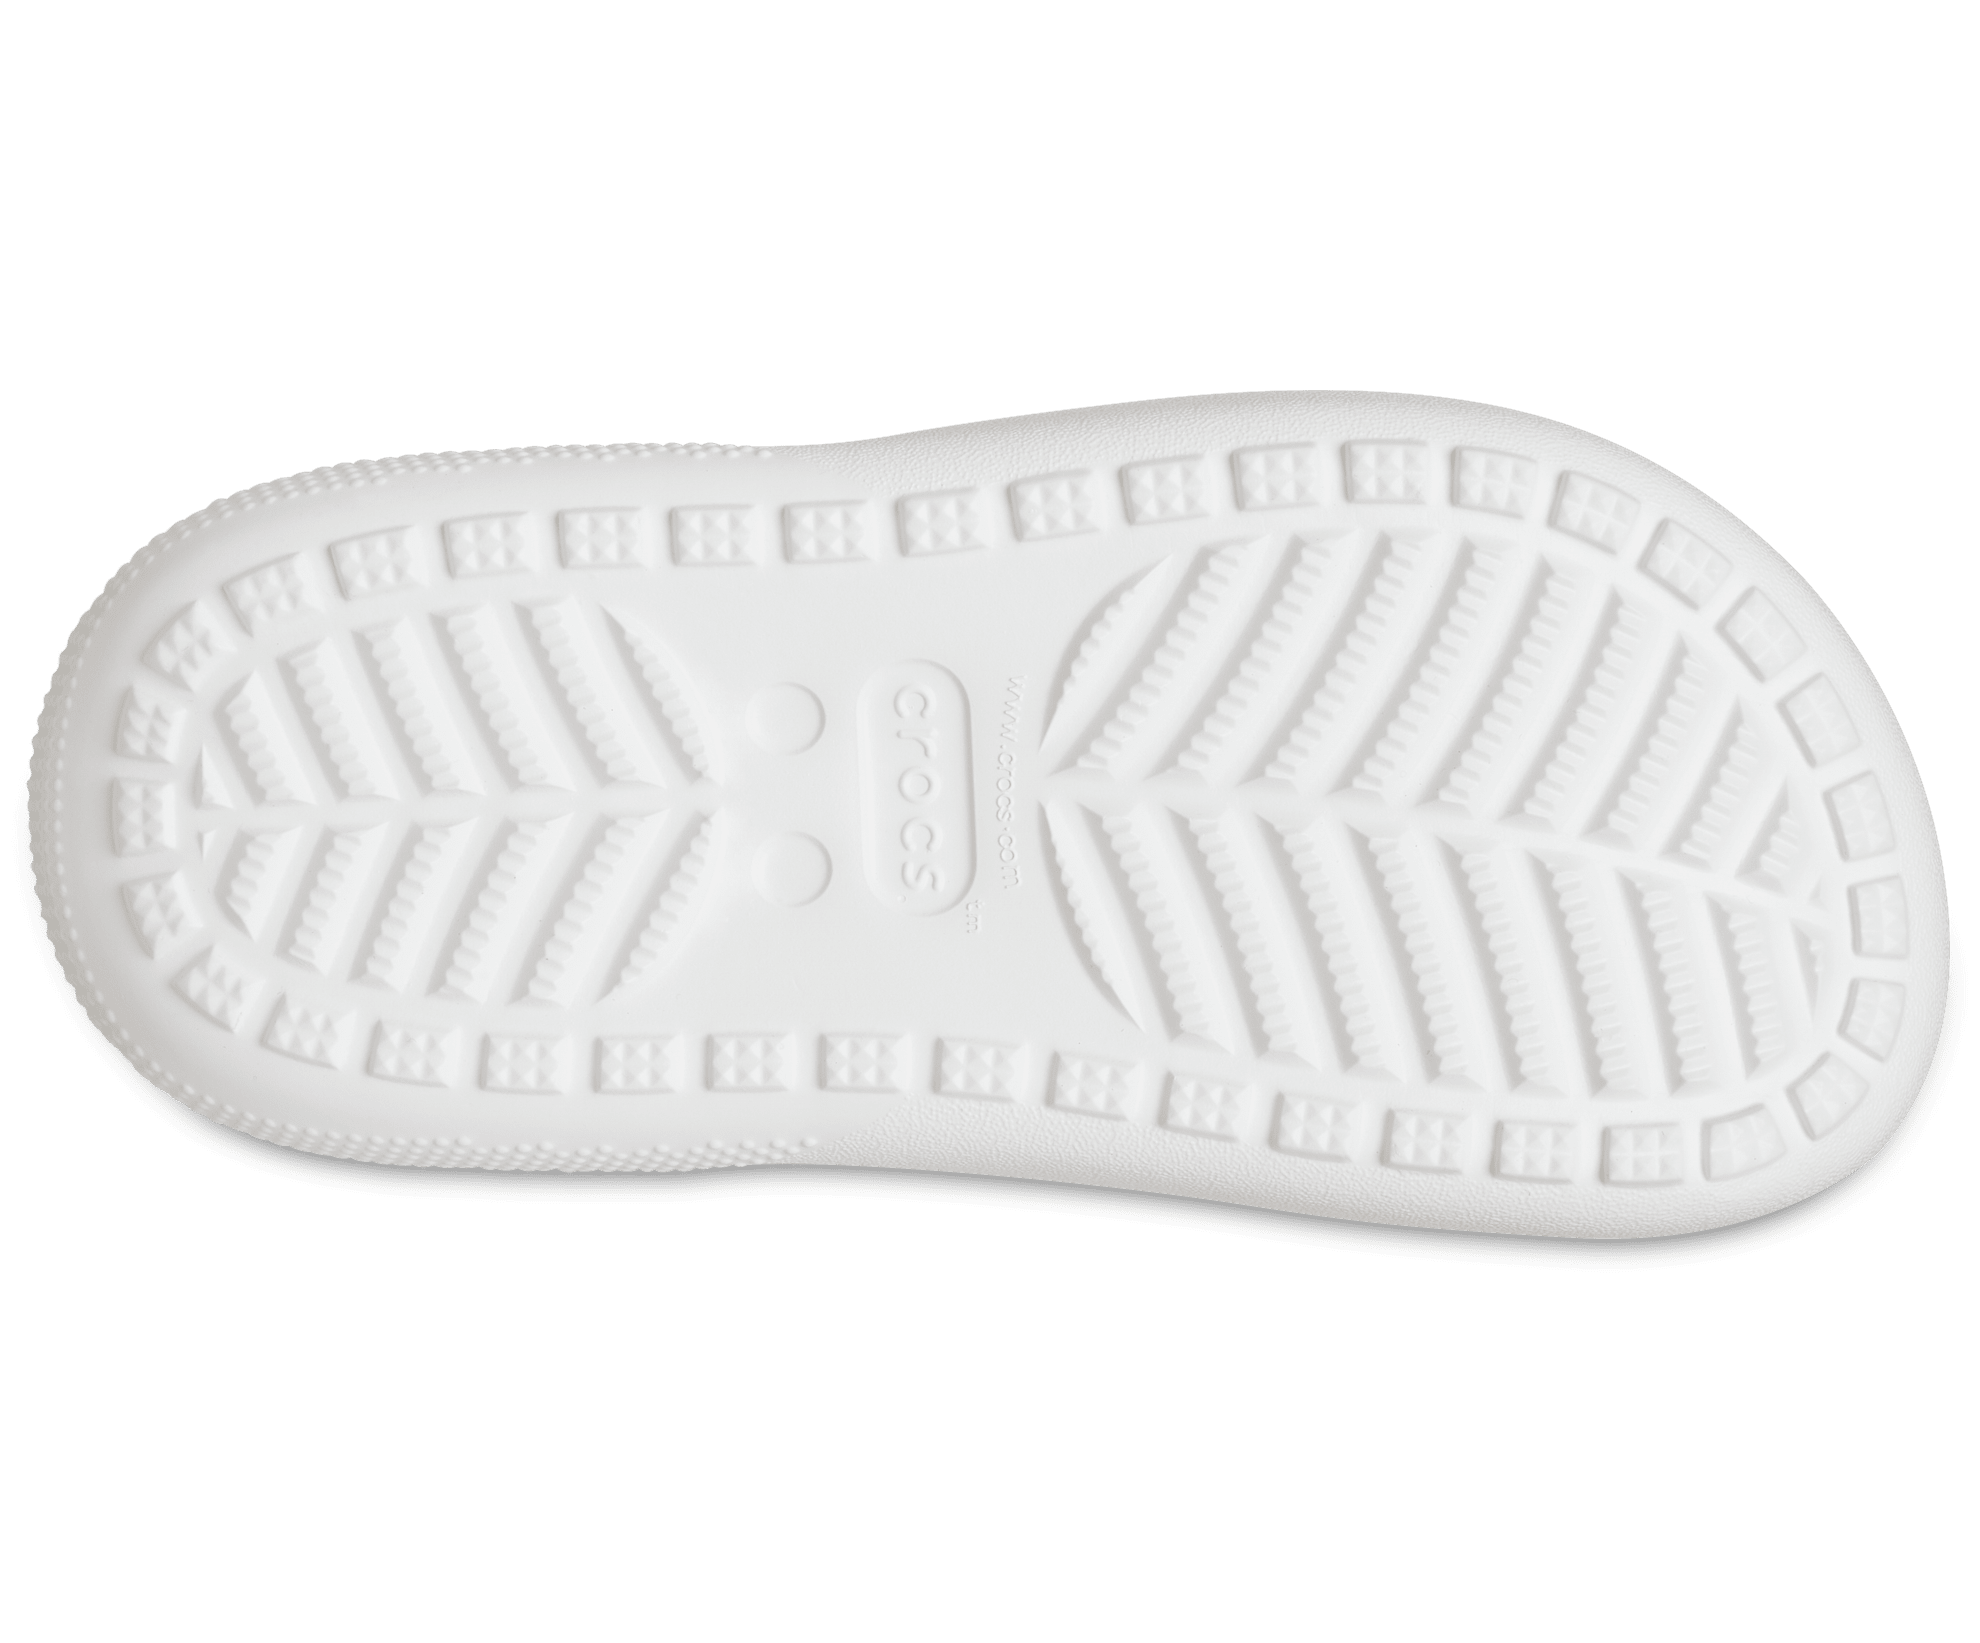 Crocs Kids Classic Cutie Clog - White - The Foot Factory